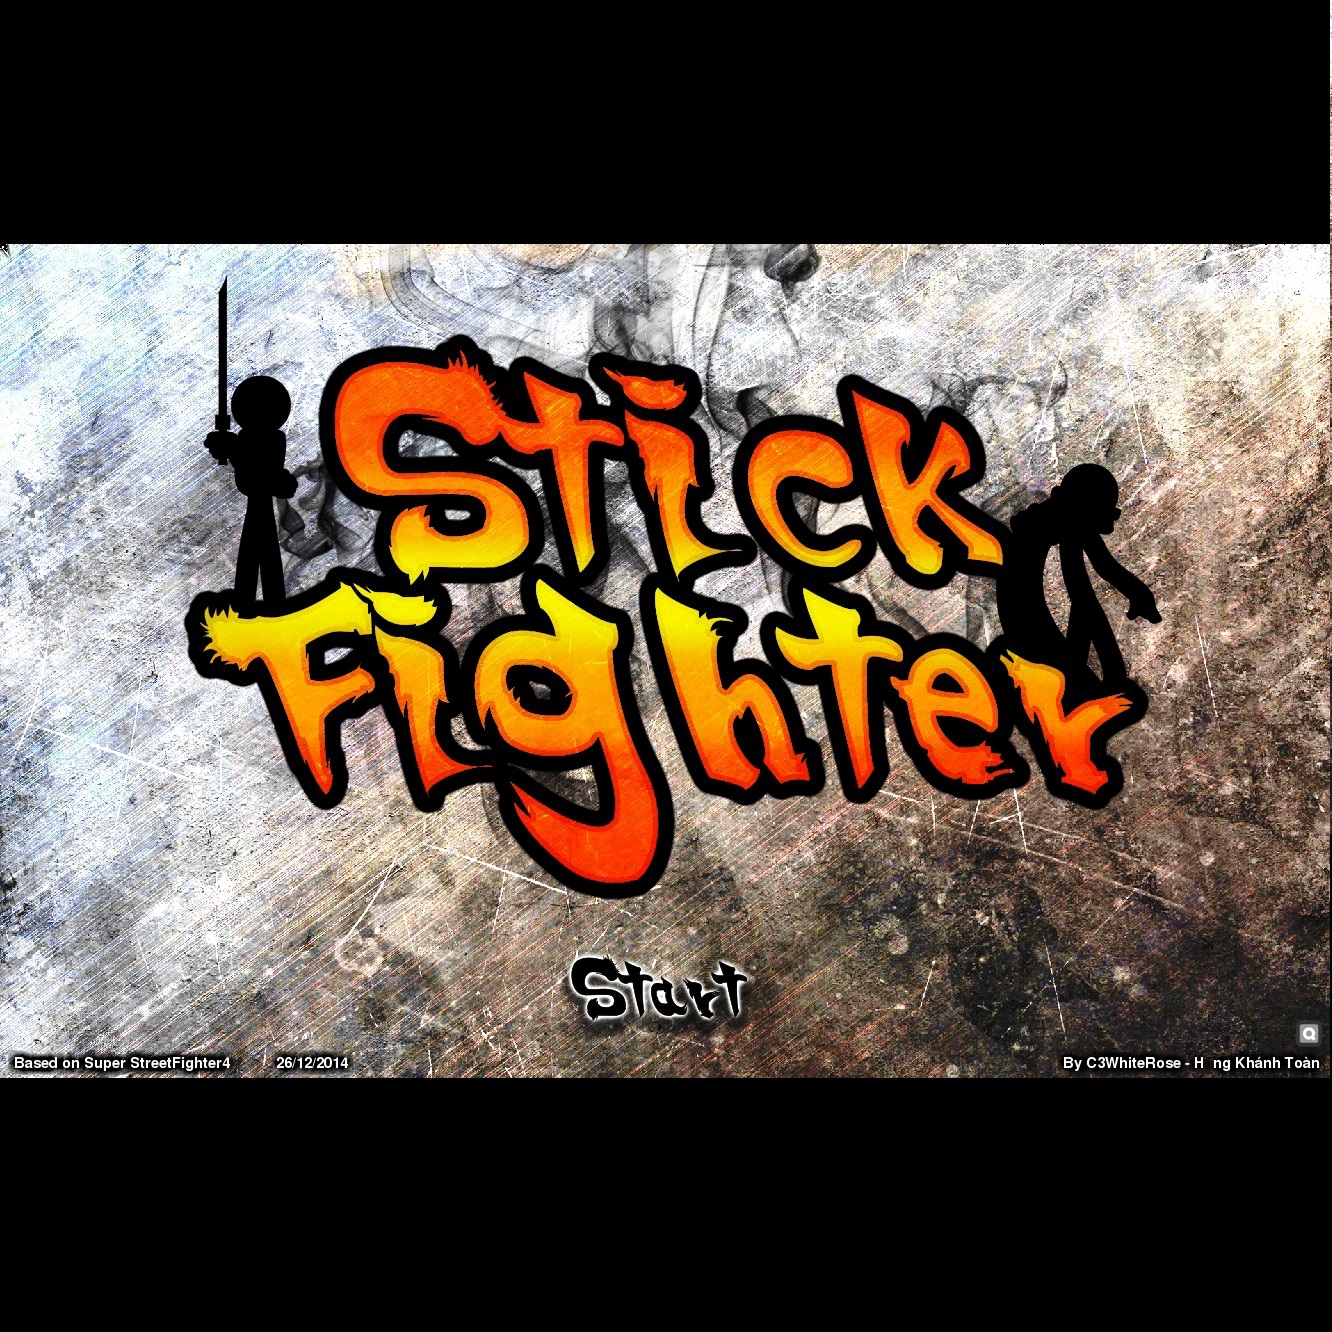 Stick Fighter